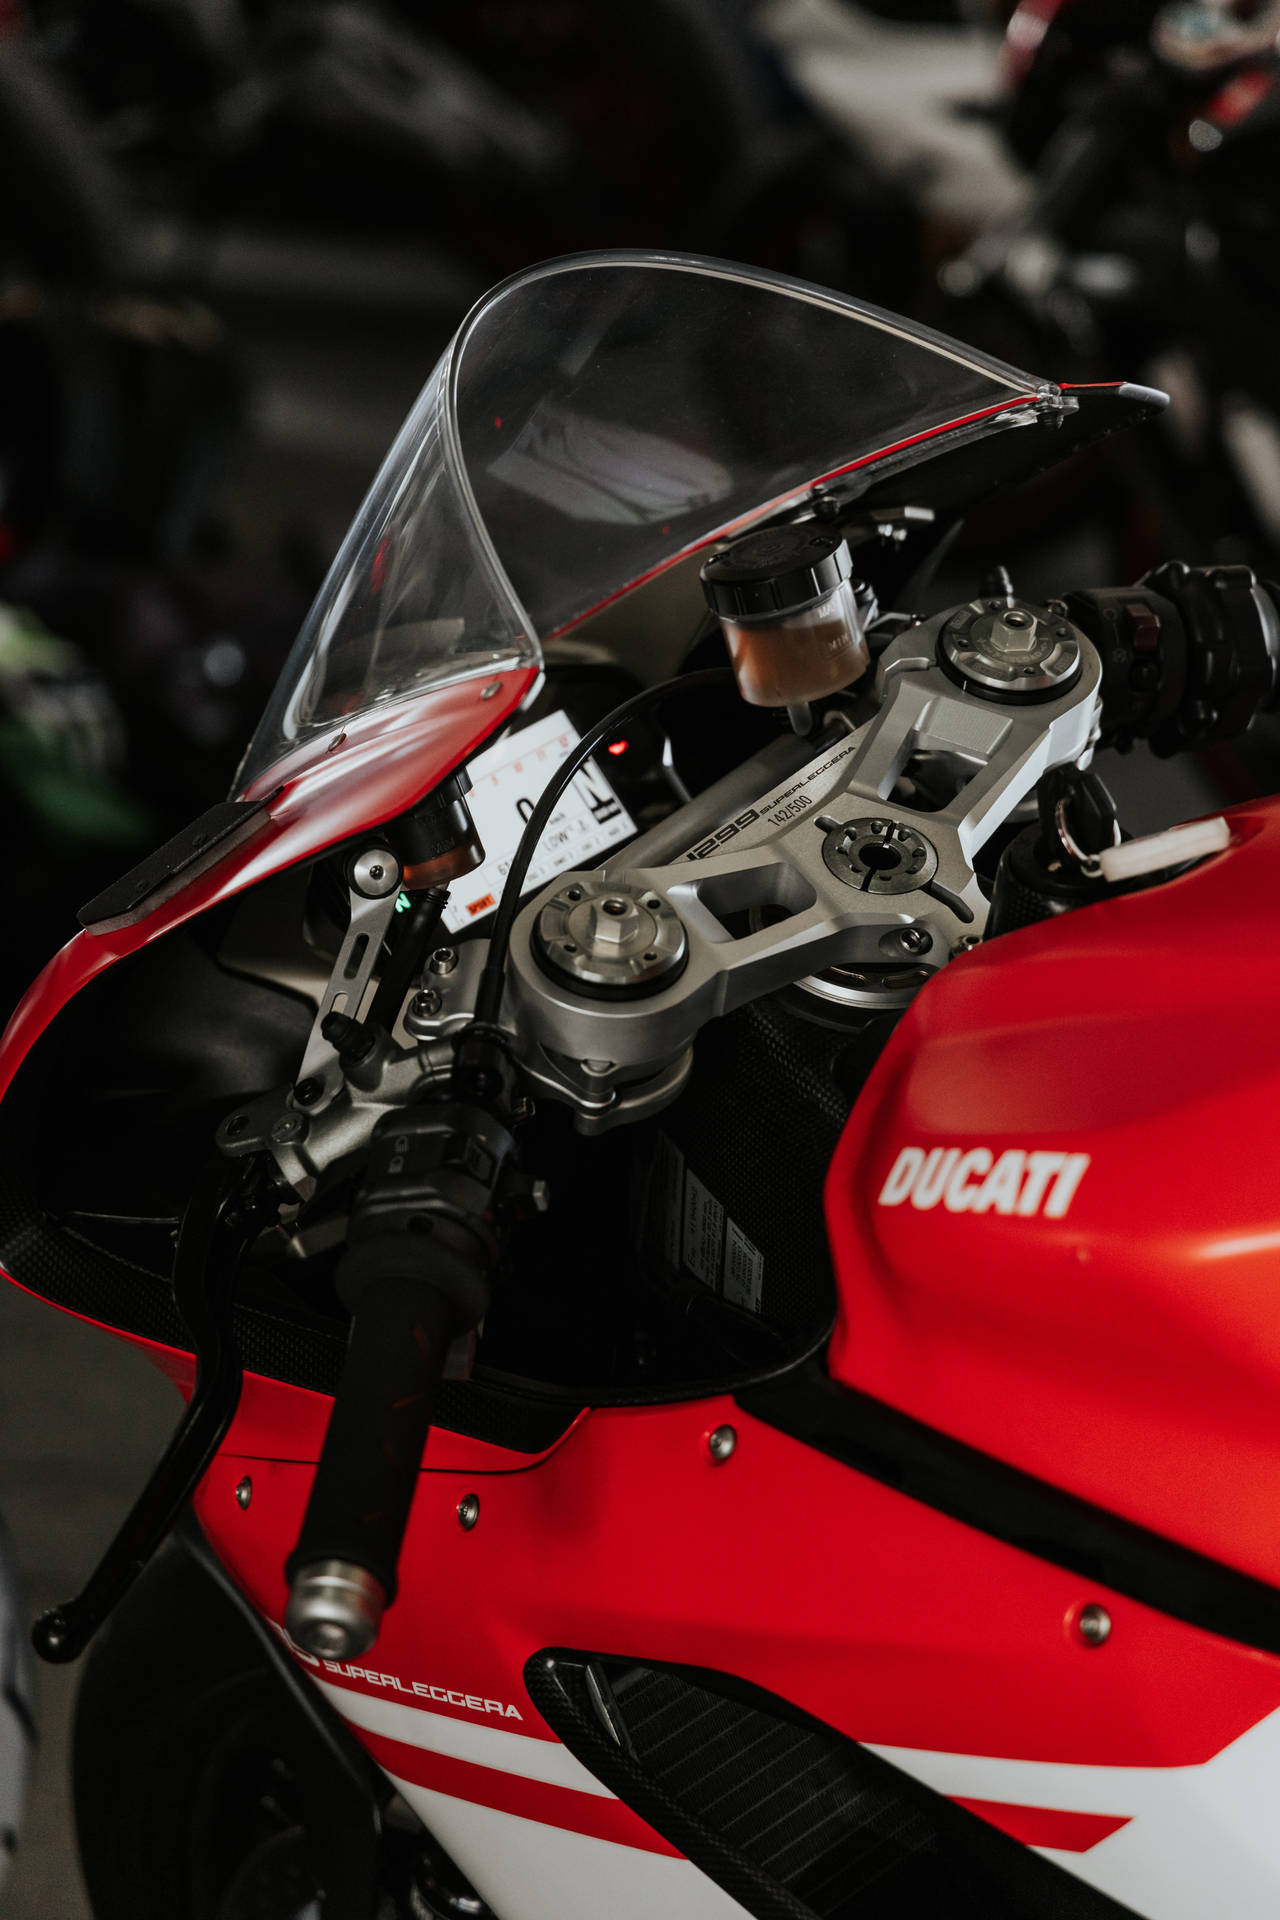 Stunning Red Ducati Bike Profile View Wallpaper